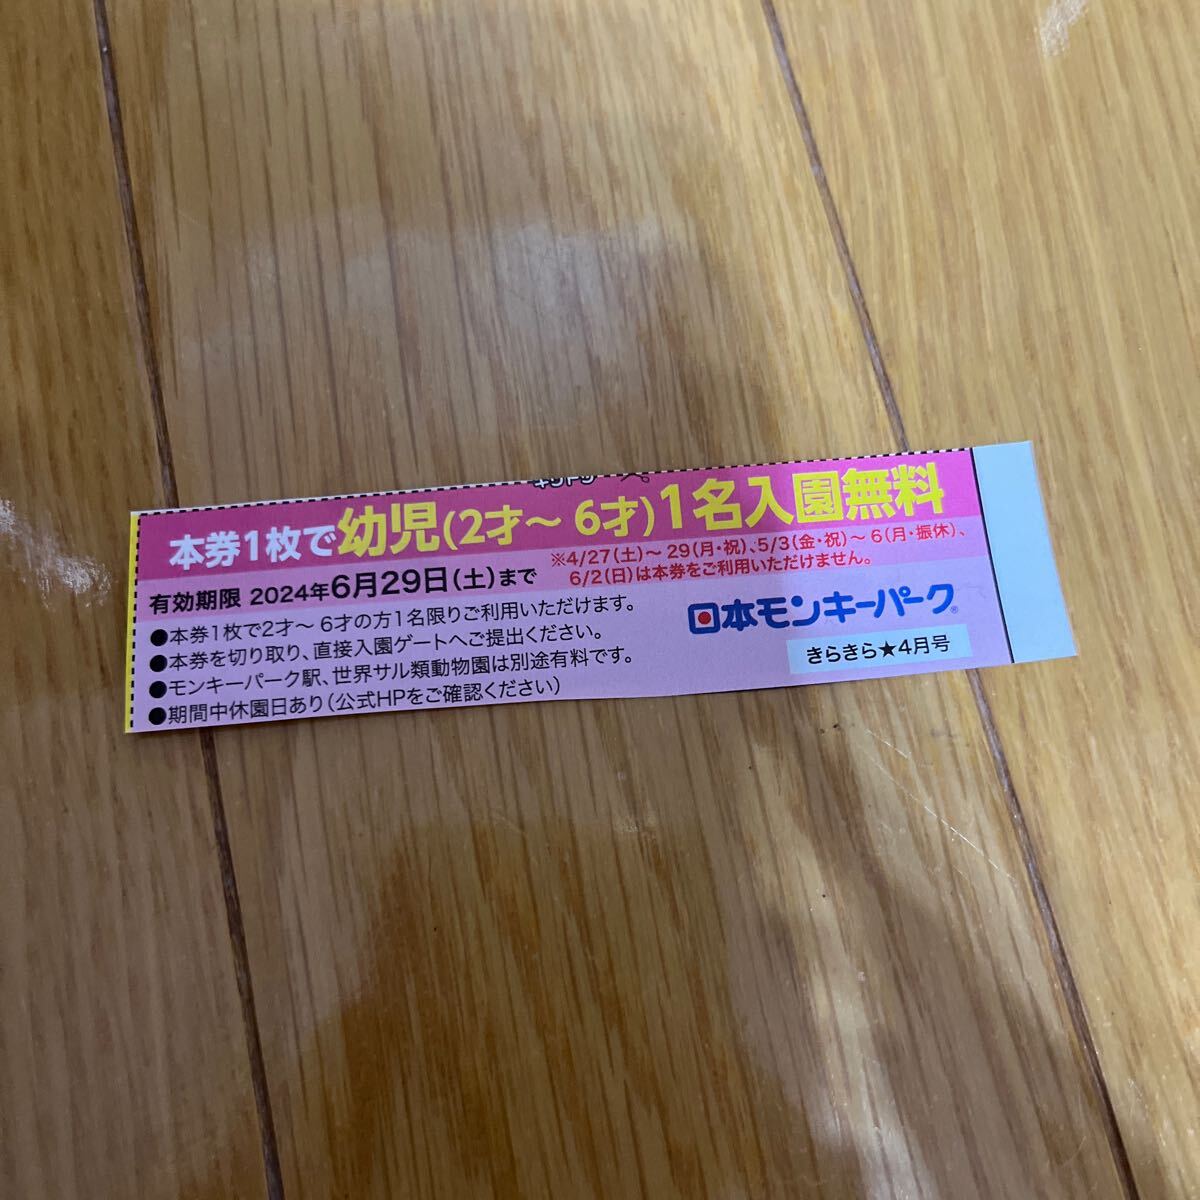 Японская обезьяна парк интравармент бесплатный билет бесплатный билет Aichi Prefecture Travel Travel